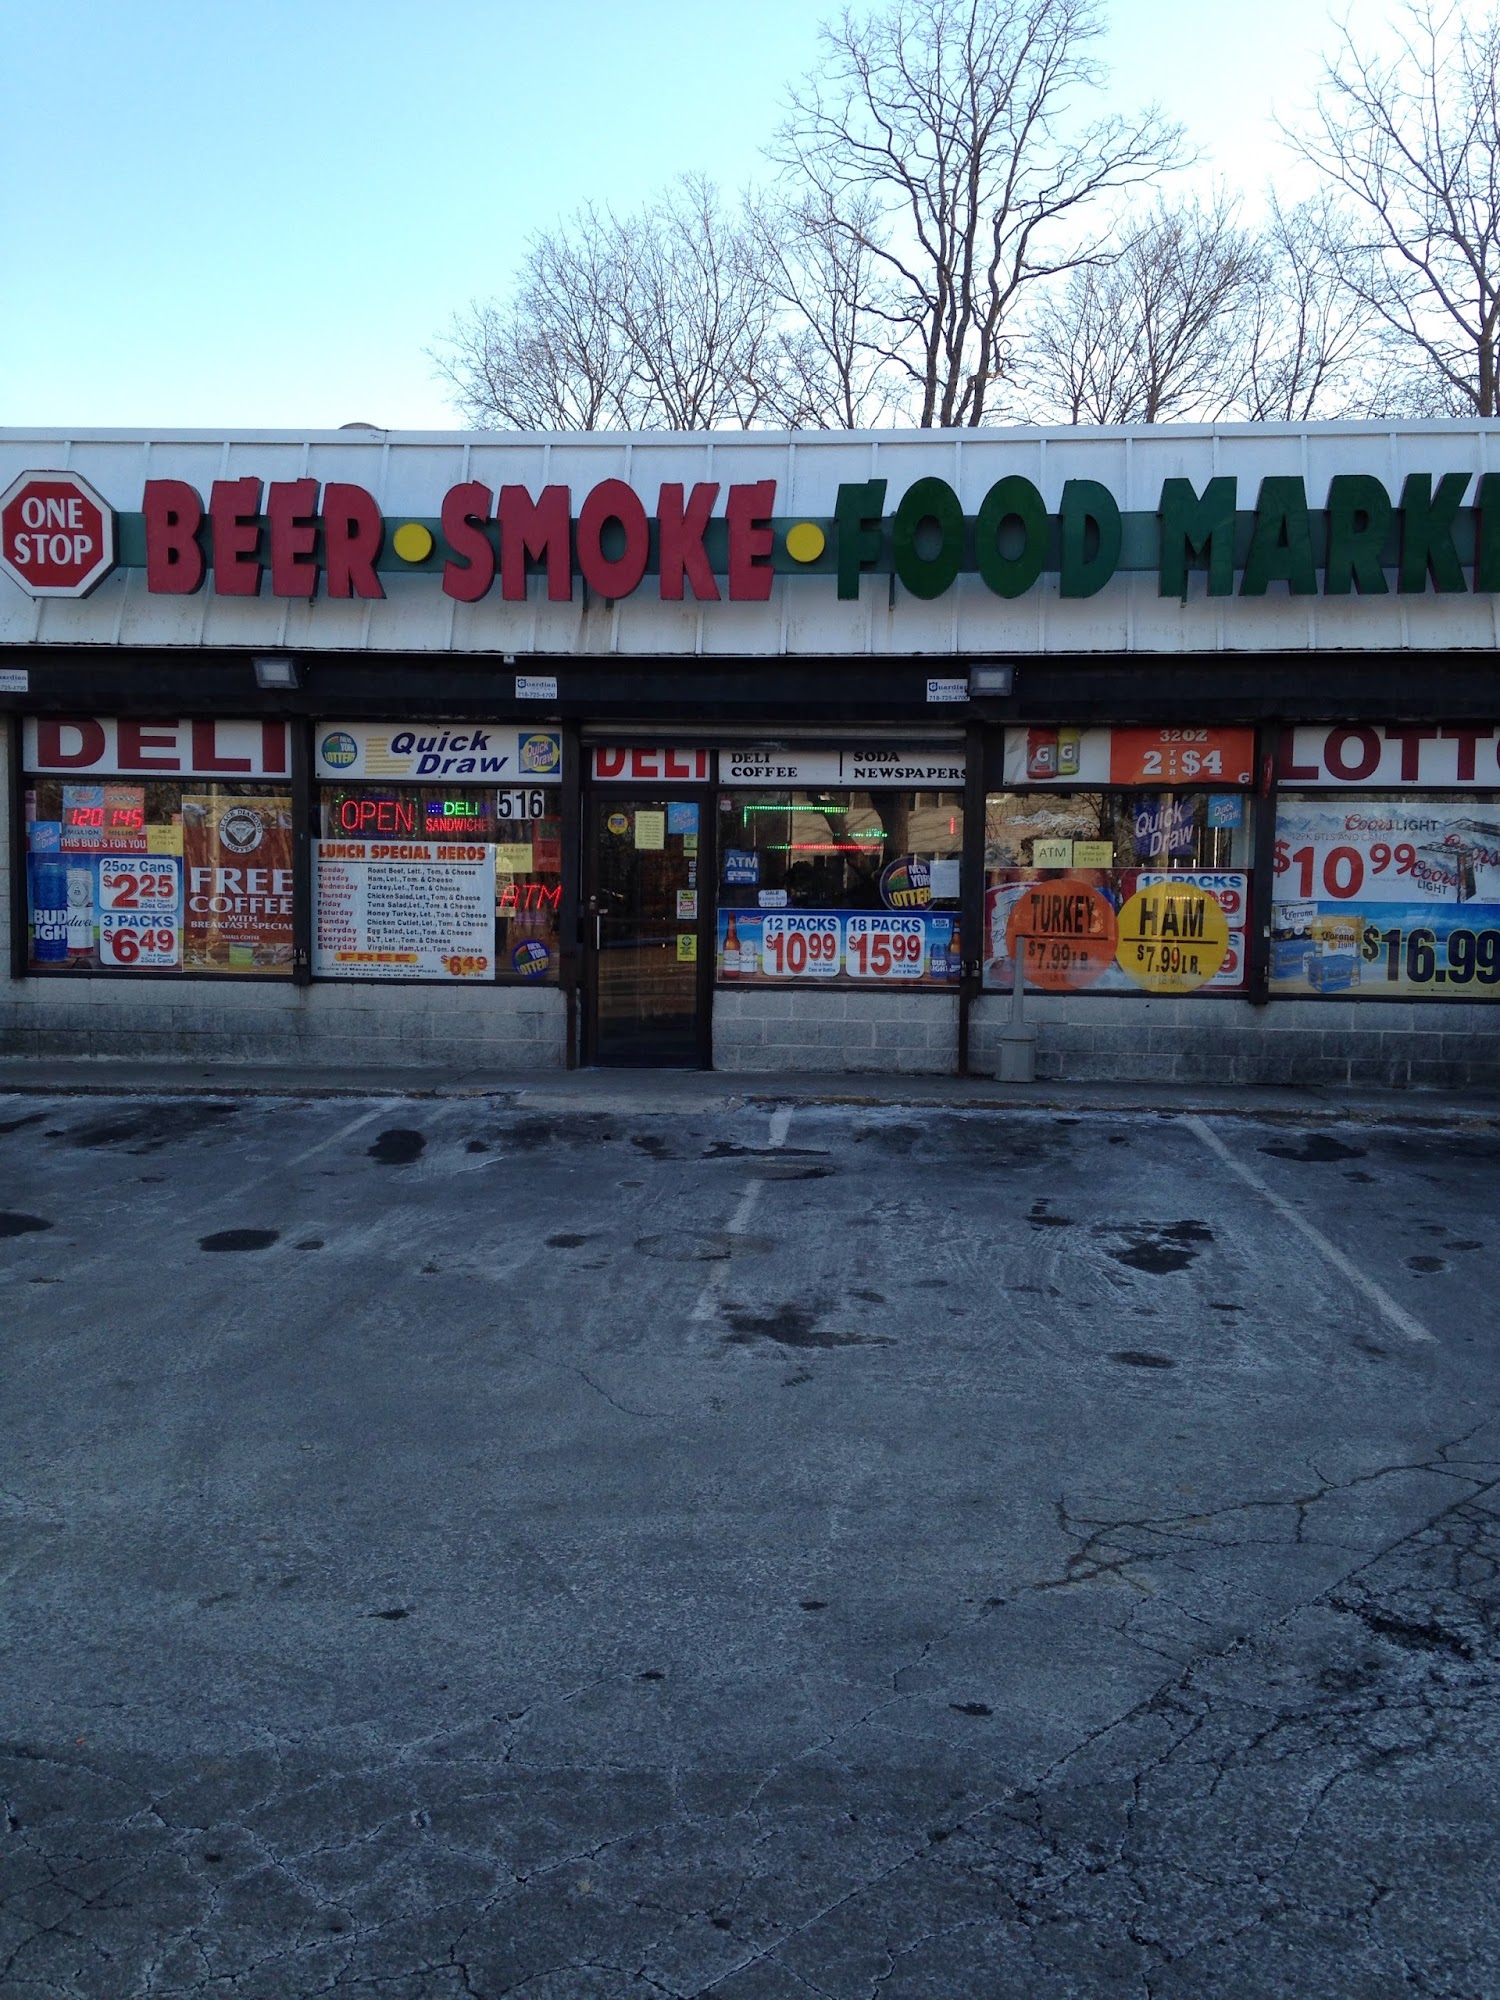 One Stop Beer Smoke & Food Market